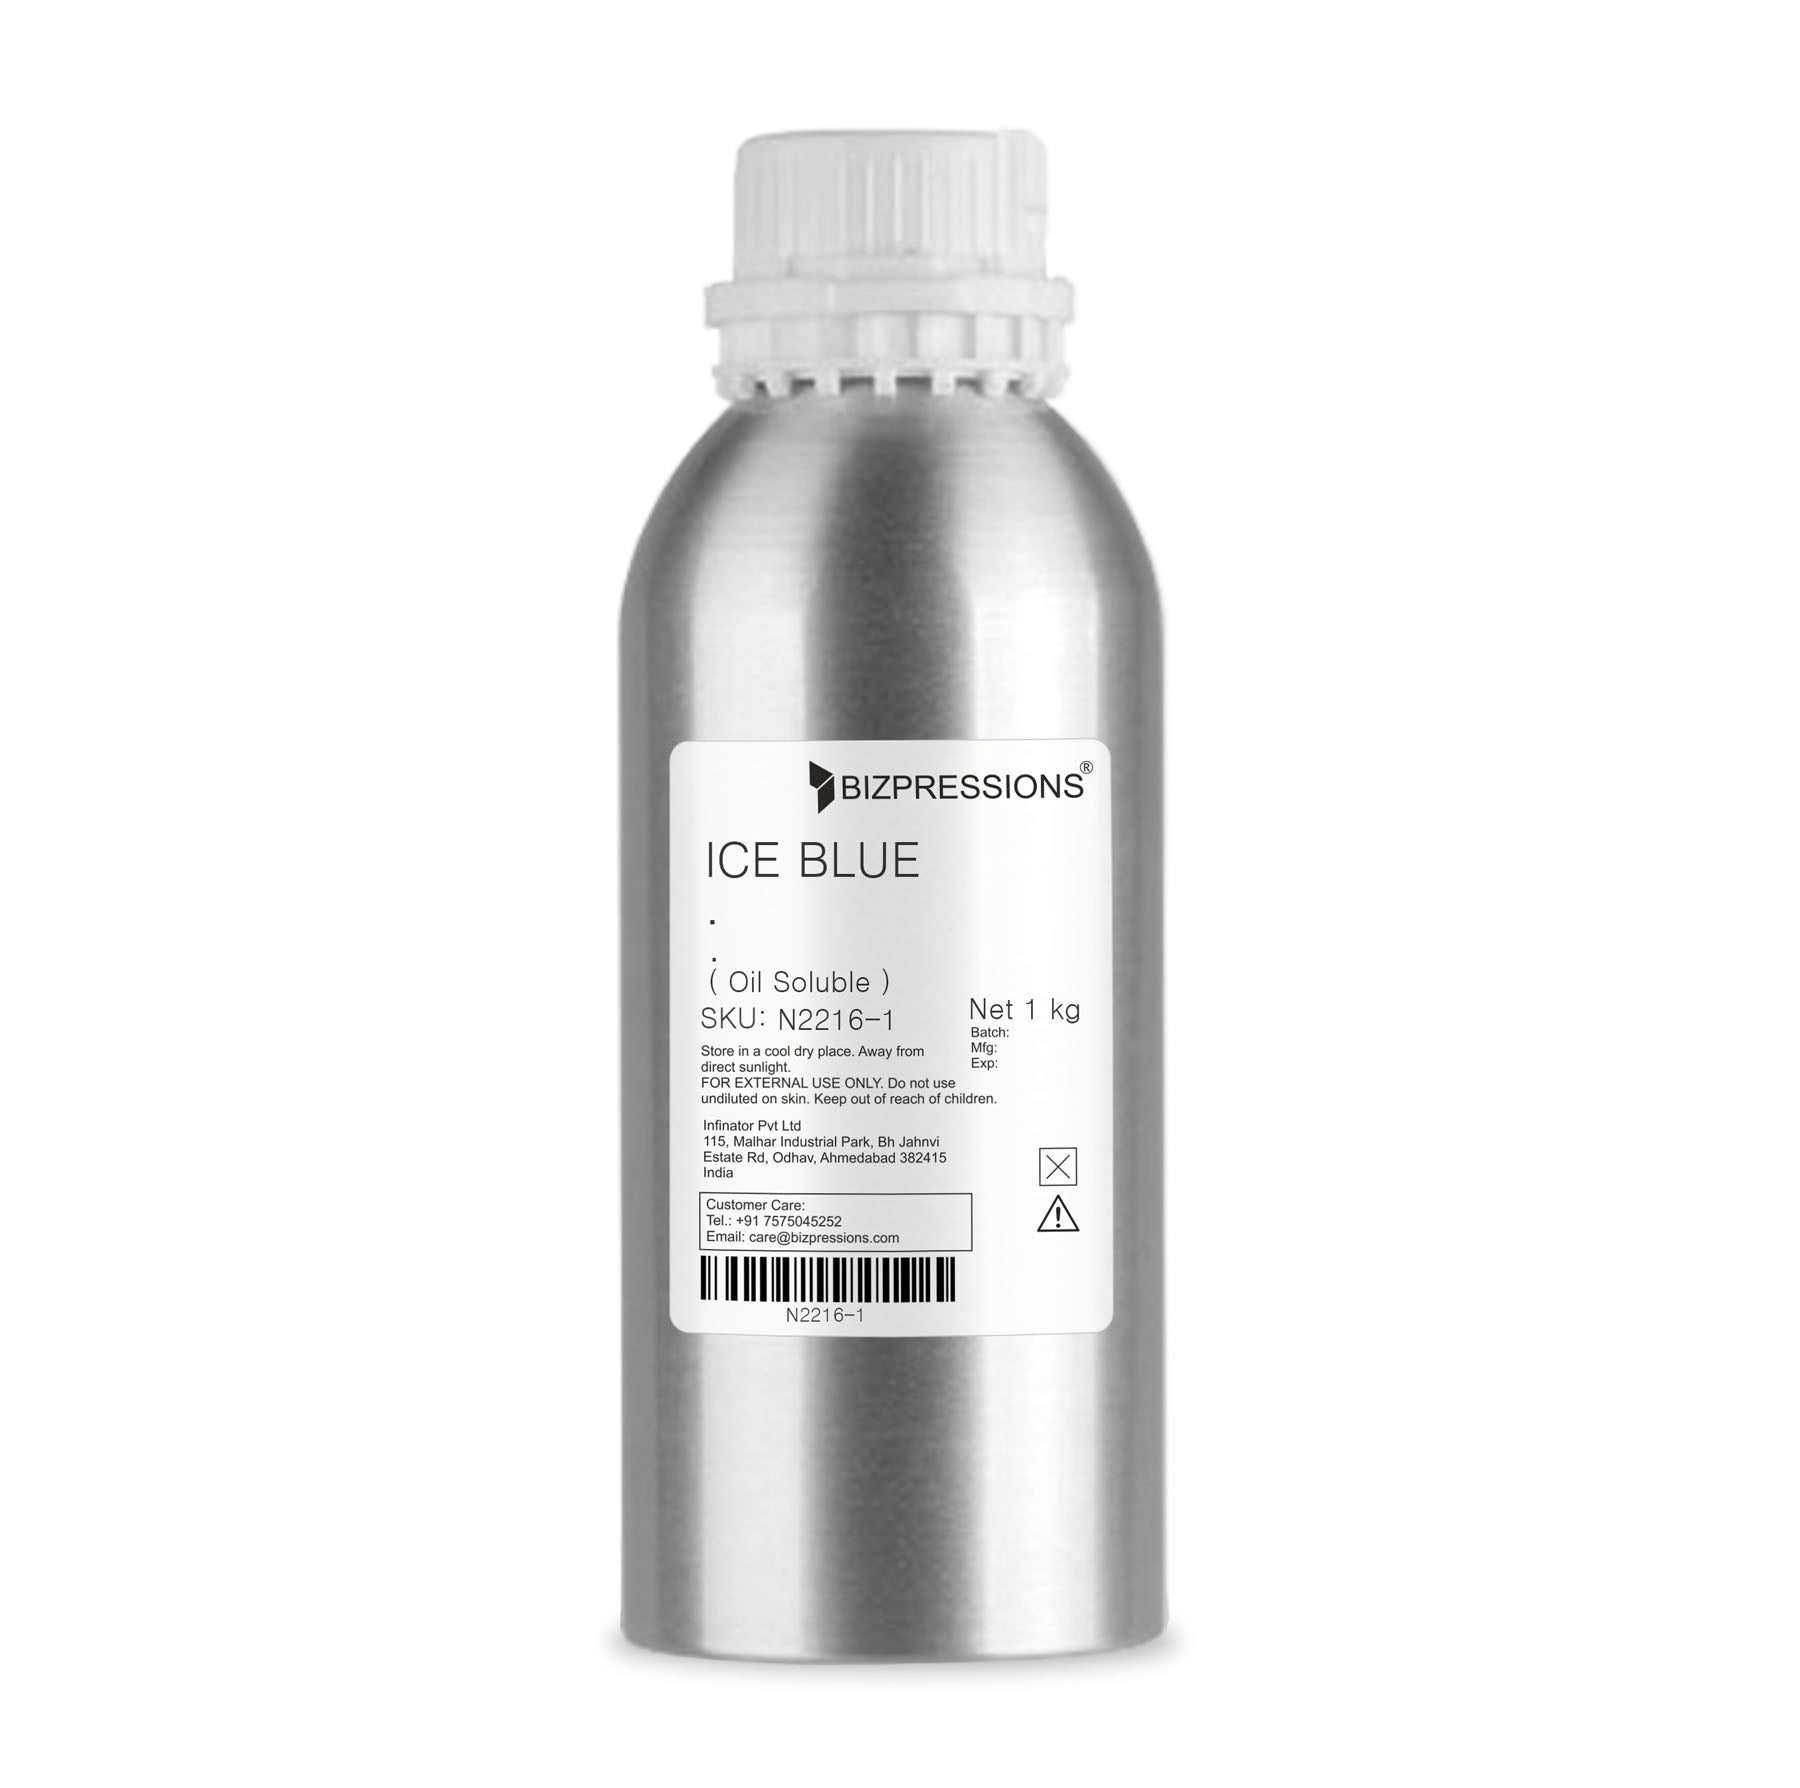 ICE BLUE - Fragrance ( Oil Soluble ) - 1 kg